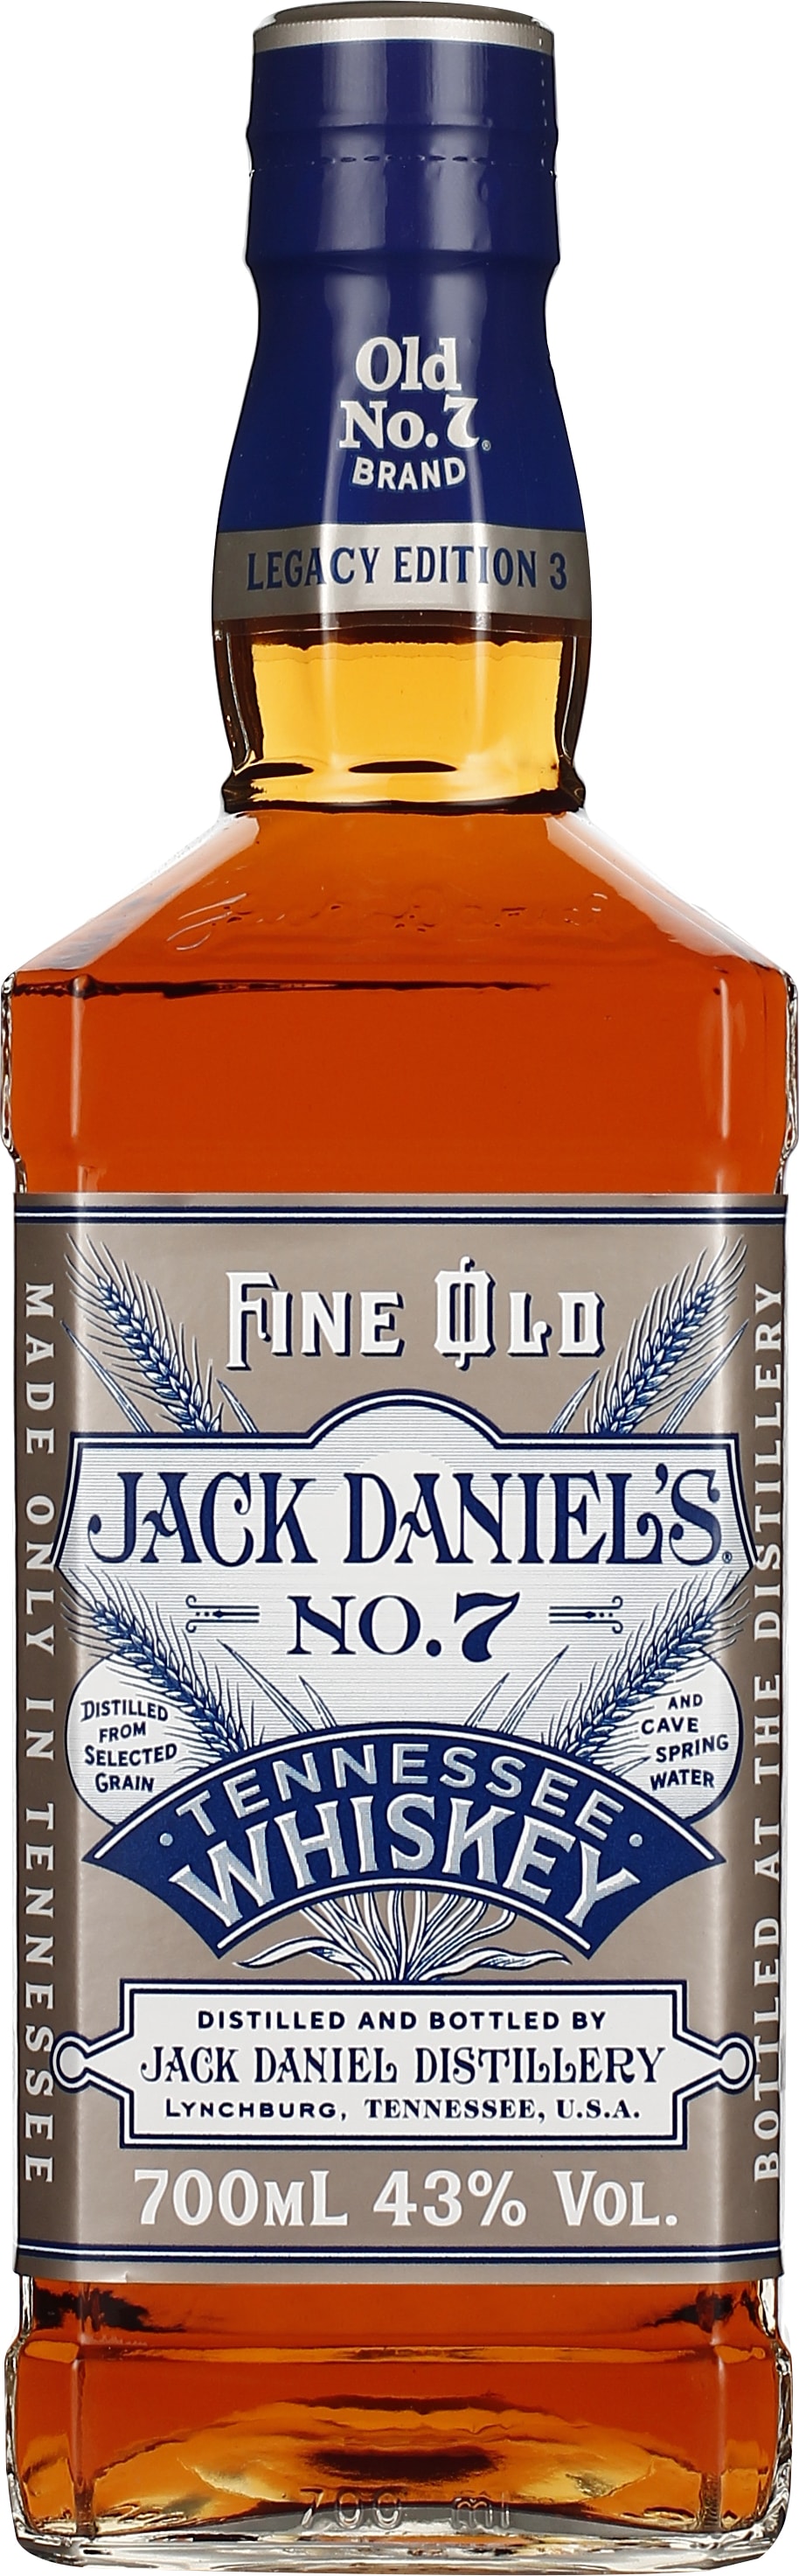 Drankdozijn Jack Daniels Legacy Edition 3 70CL aanbieding